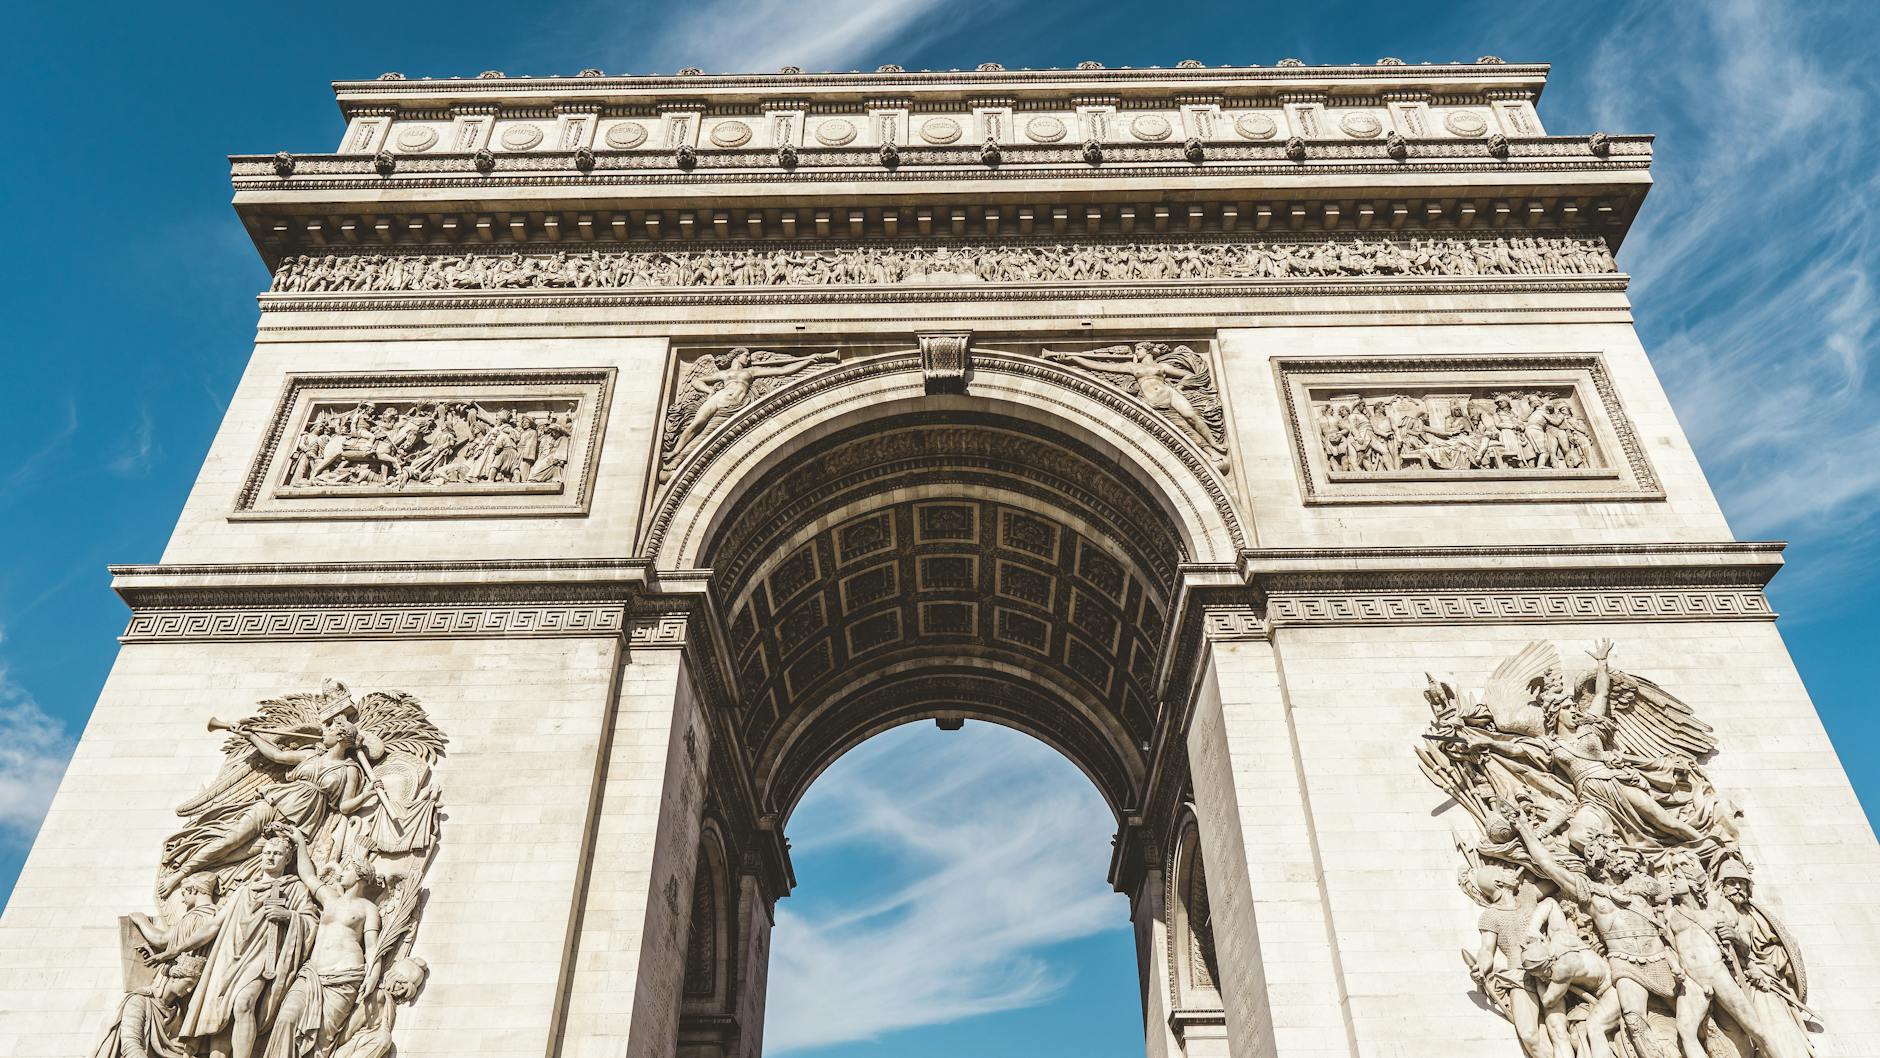 Arc De Triomphe · Free Stock Photo